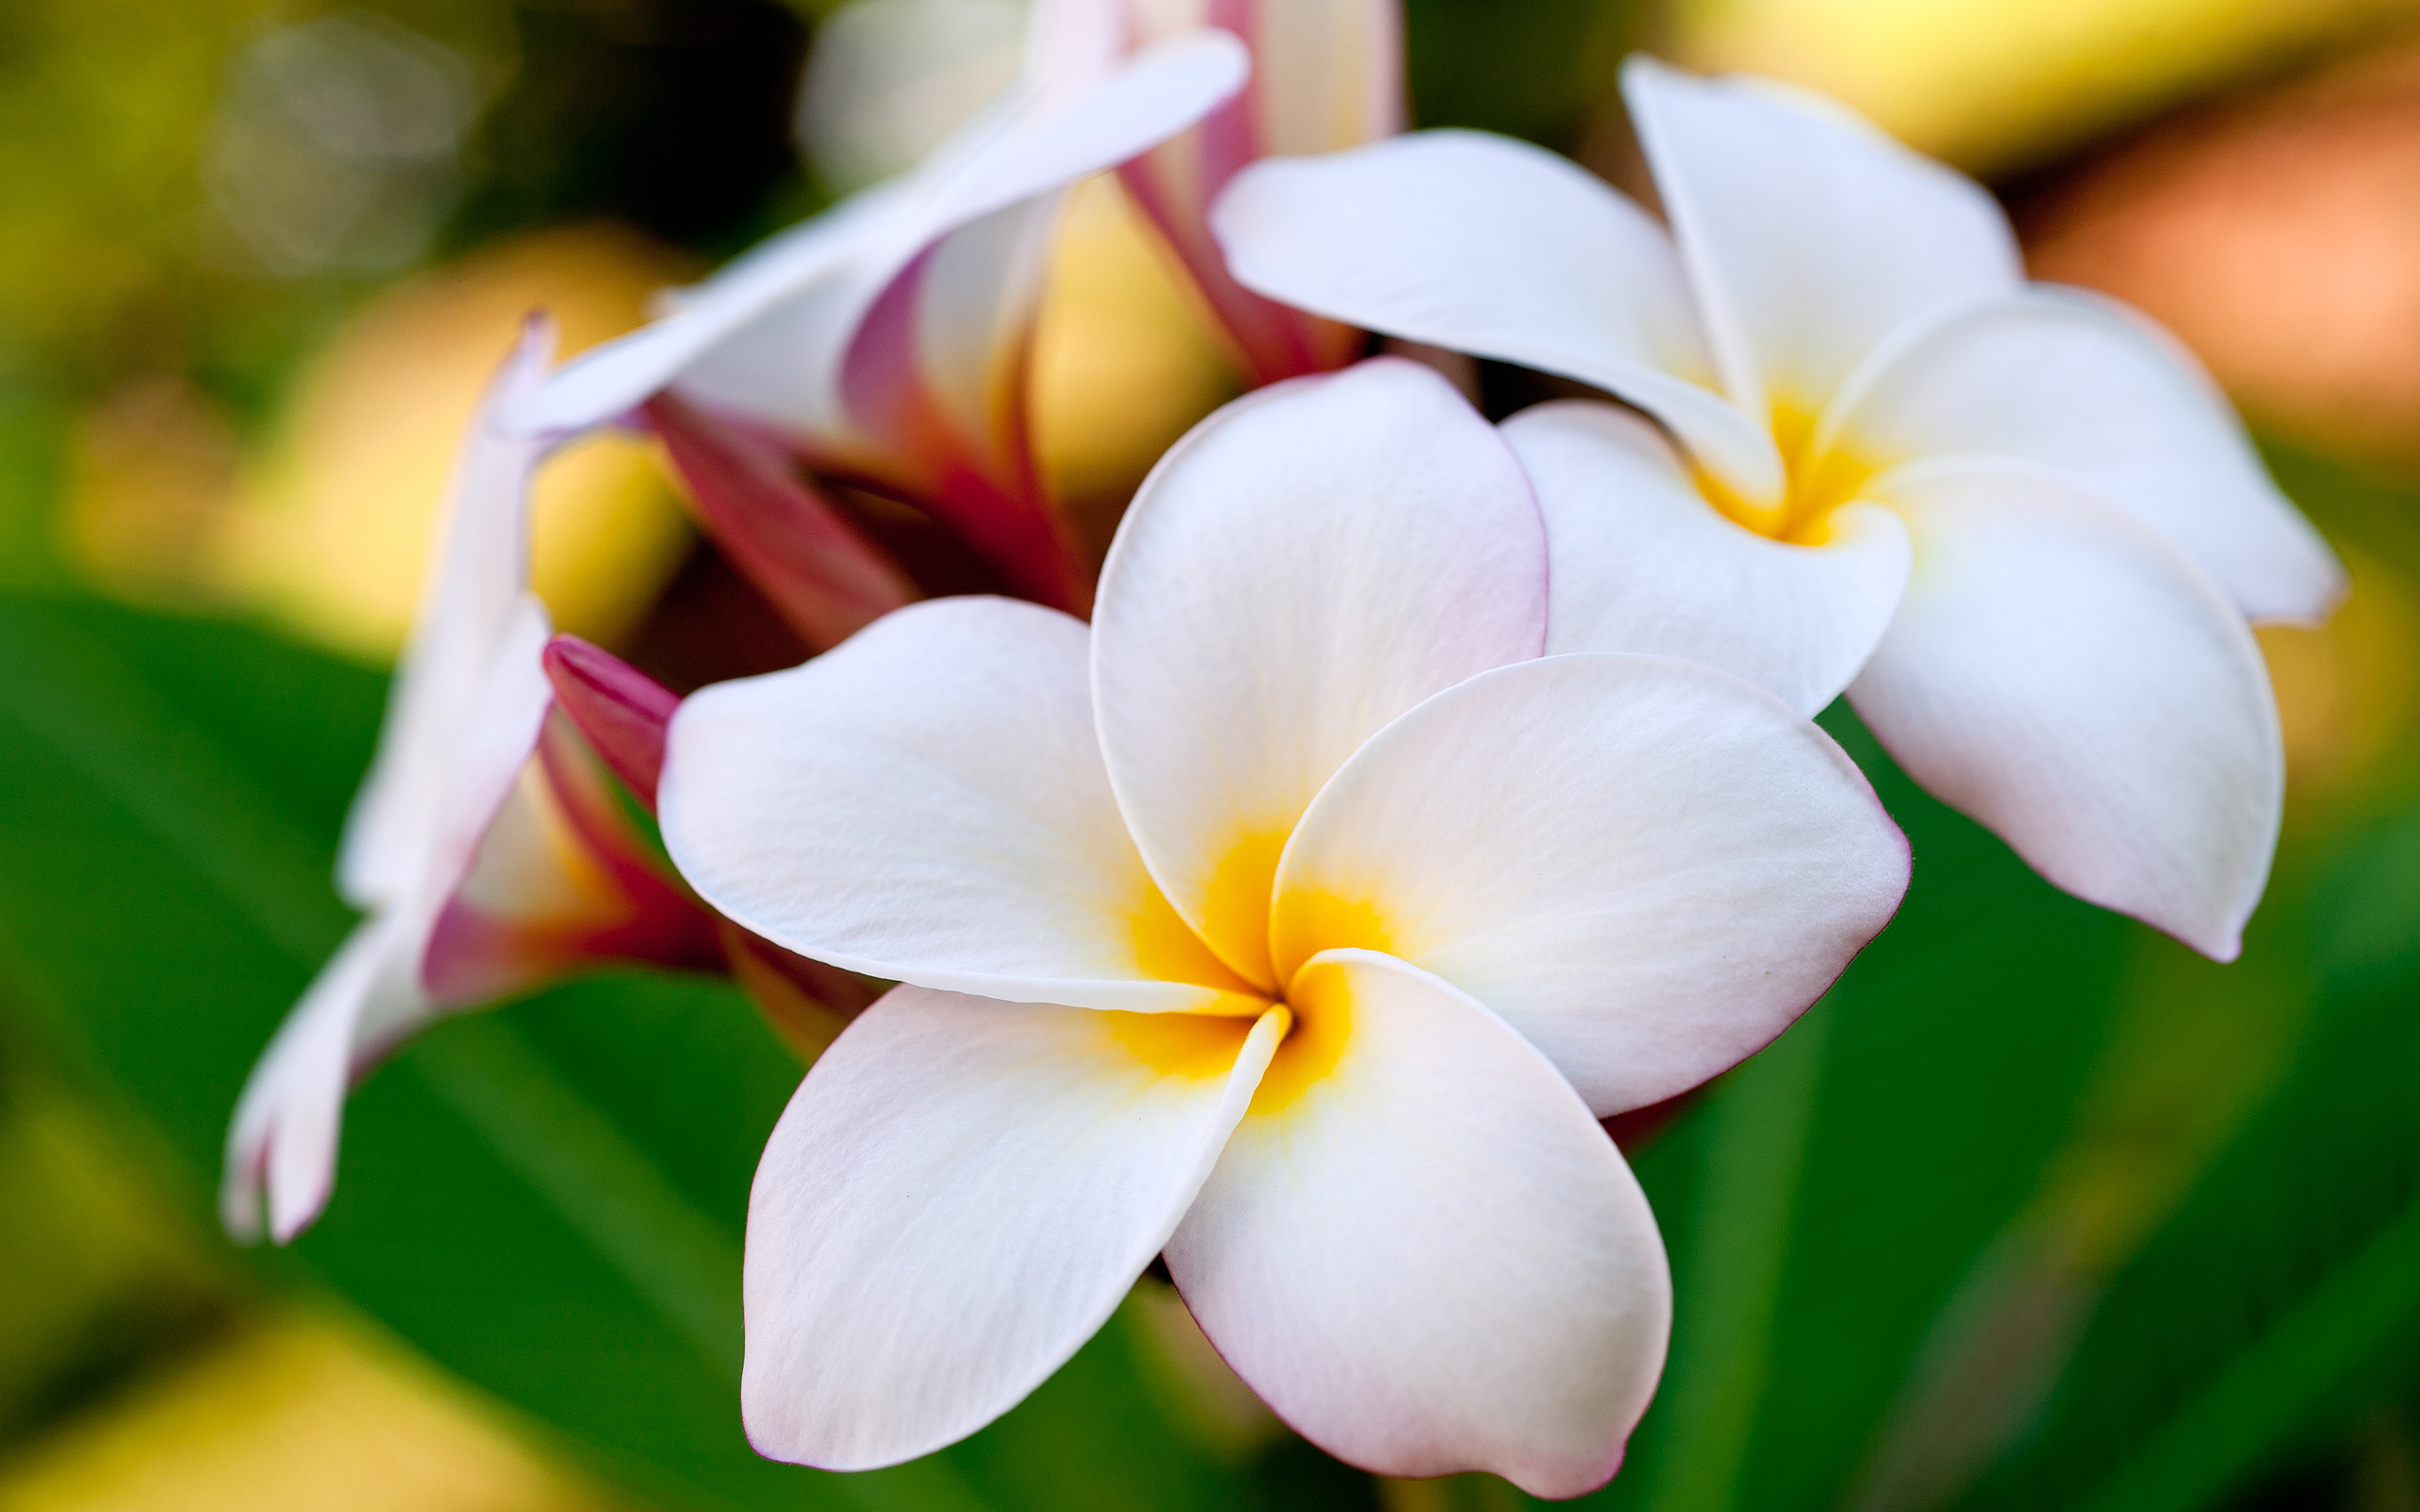 244903 descargar imagen tierra/naturaleza, frangipani, flor, blanco, flores: fondos de pantalla y protectores de pantalla gratis